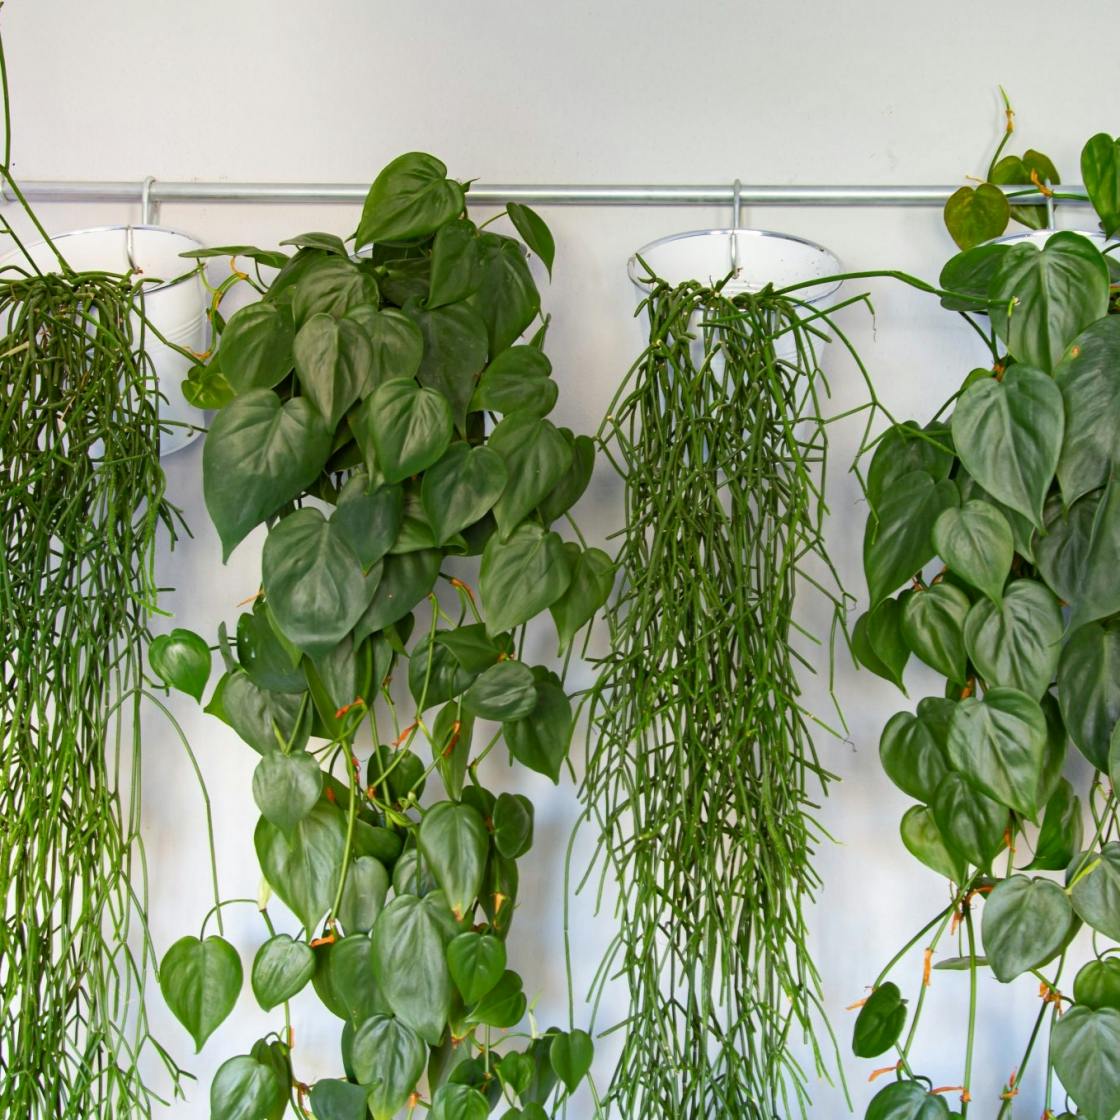 Trailing Houseplants  Hanging Plants For An Indoor Jungle Feel - Indoor Plants Good For Hanging